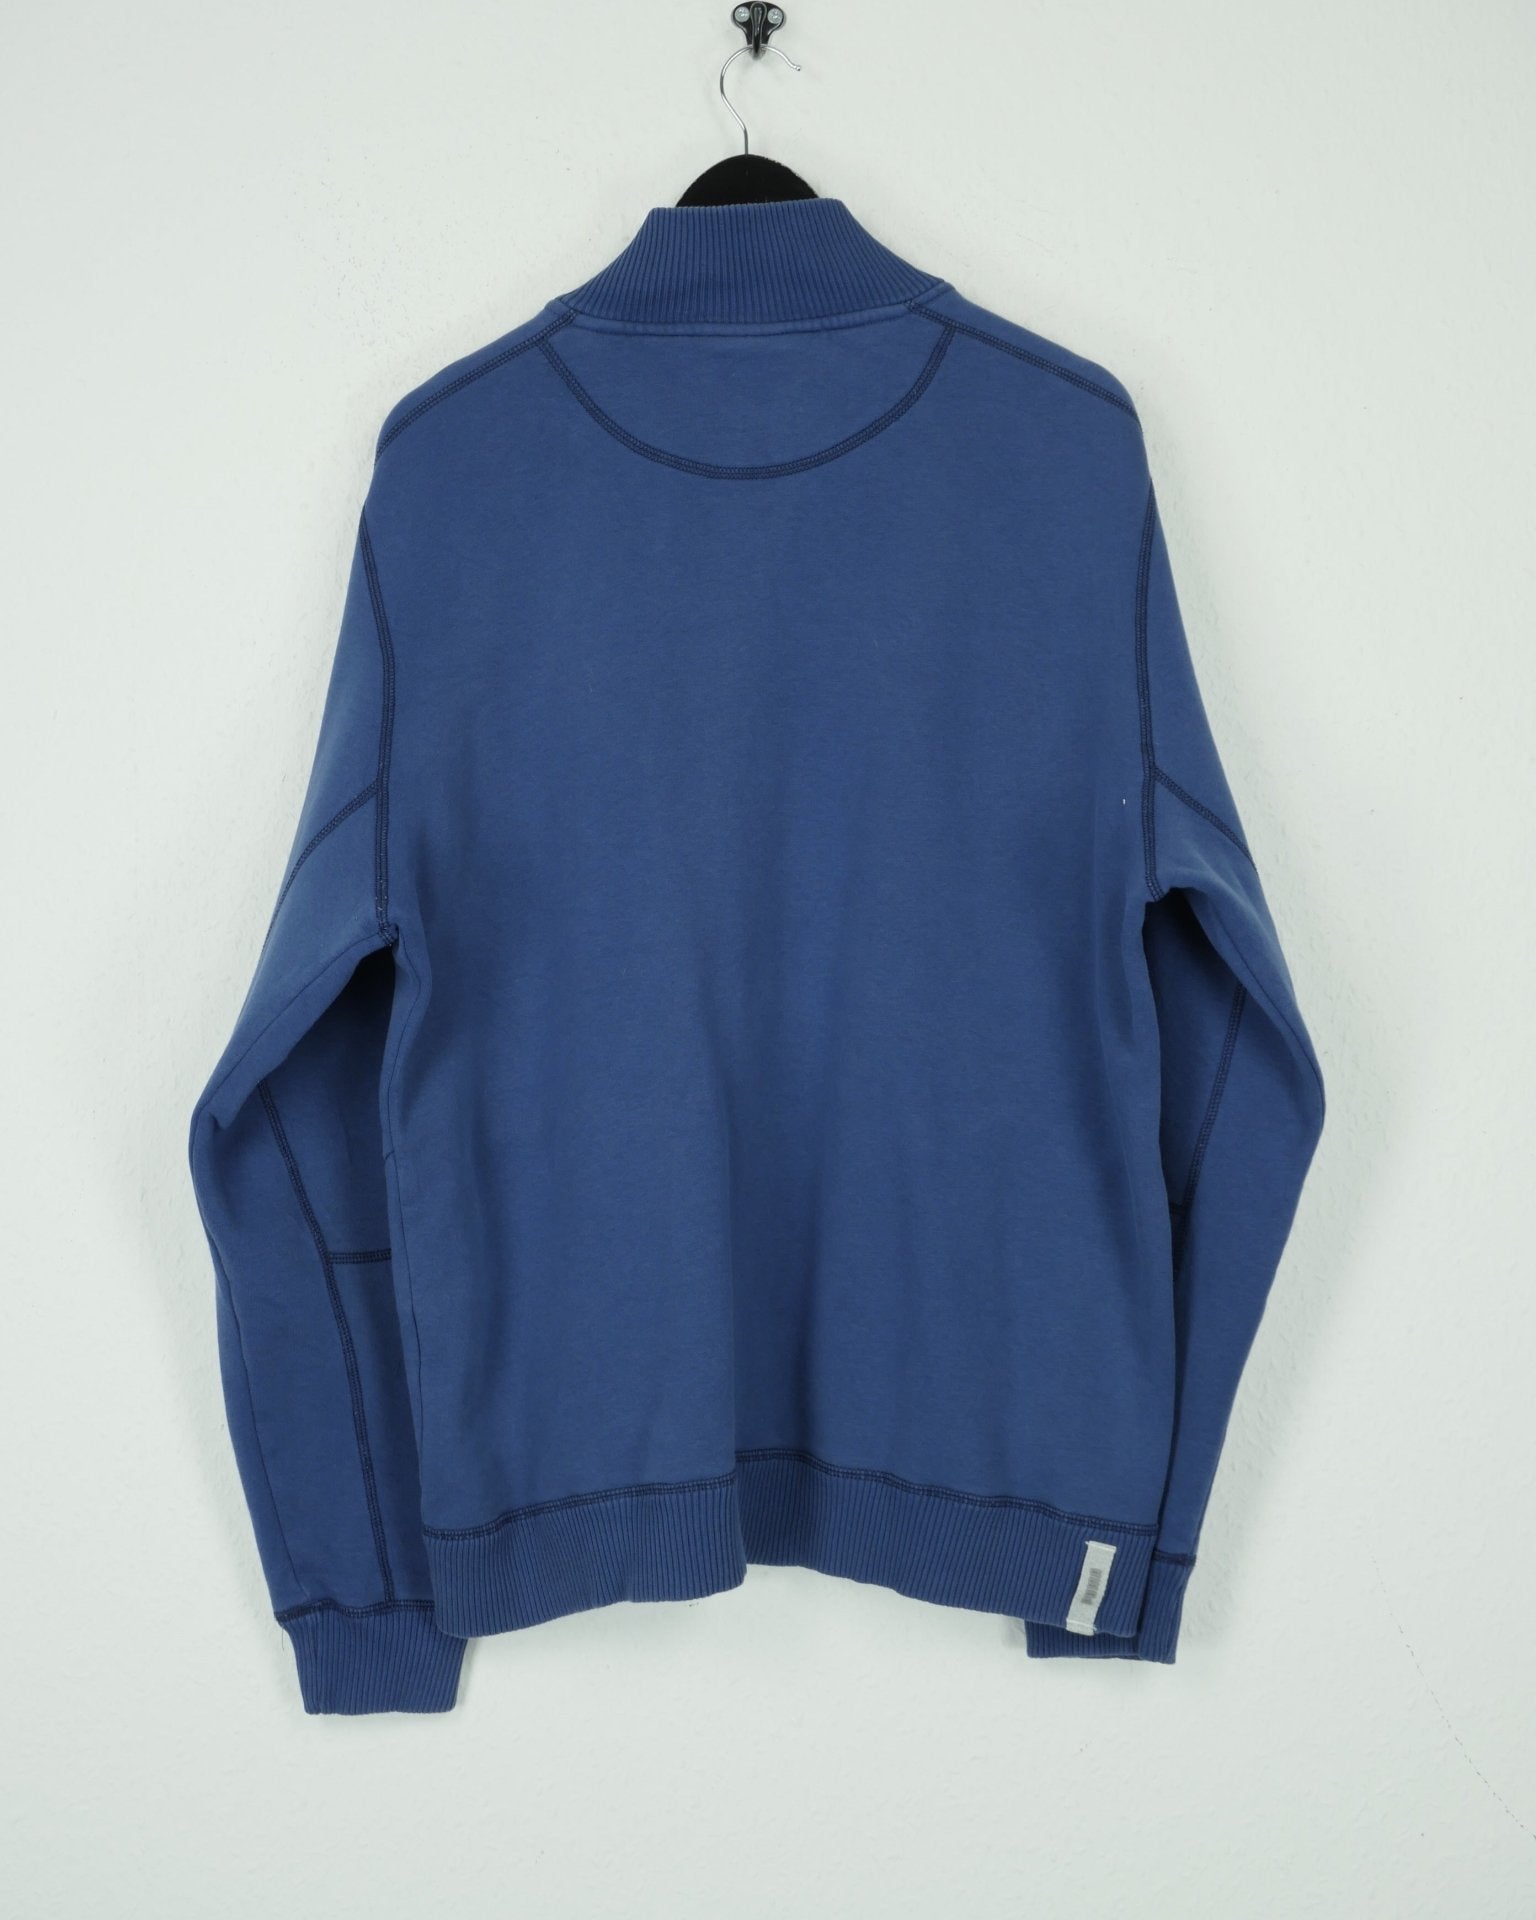 Puma basic embroidered logo blue zip sweater - Peeces